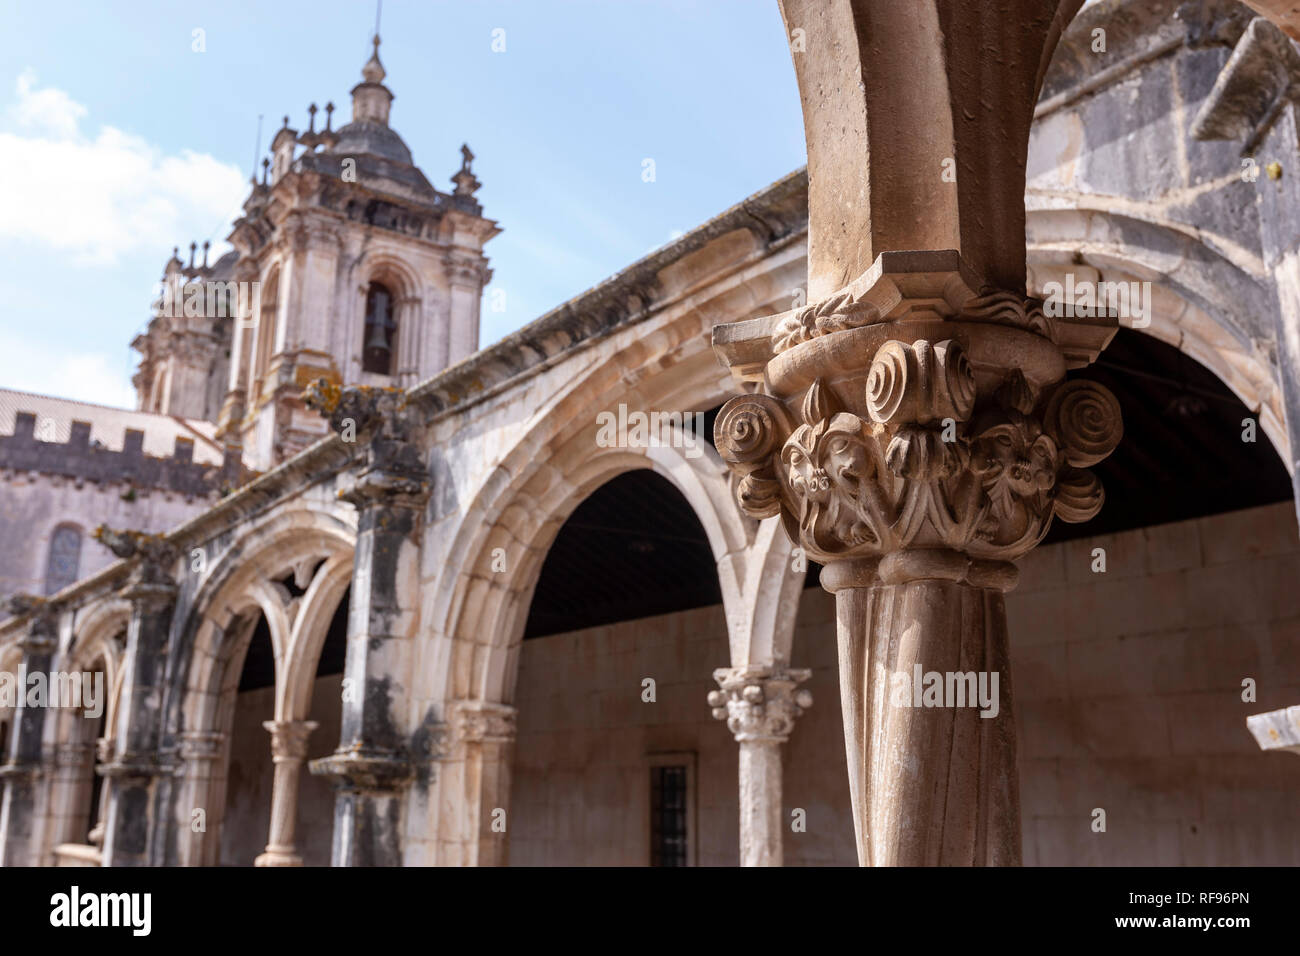 View of the cloister of the Alcobaça Monastery, Alcobaça, Portugal Stock Photo